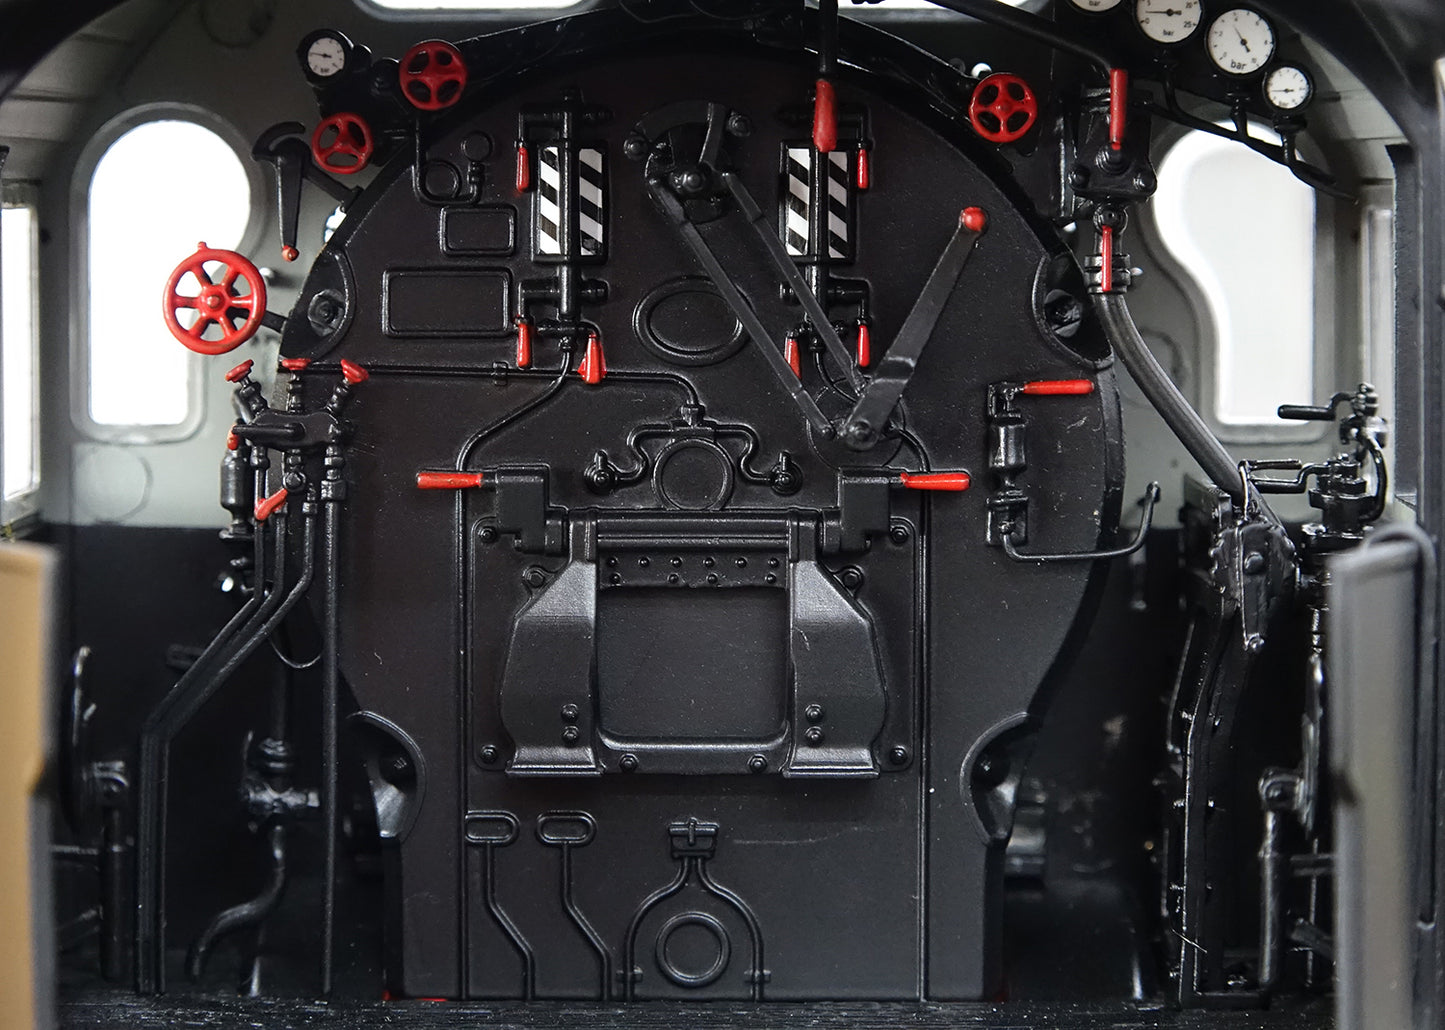 Marklin 55386 - Steam Locomotive with a Tub-Style Tender